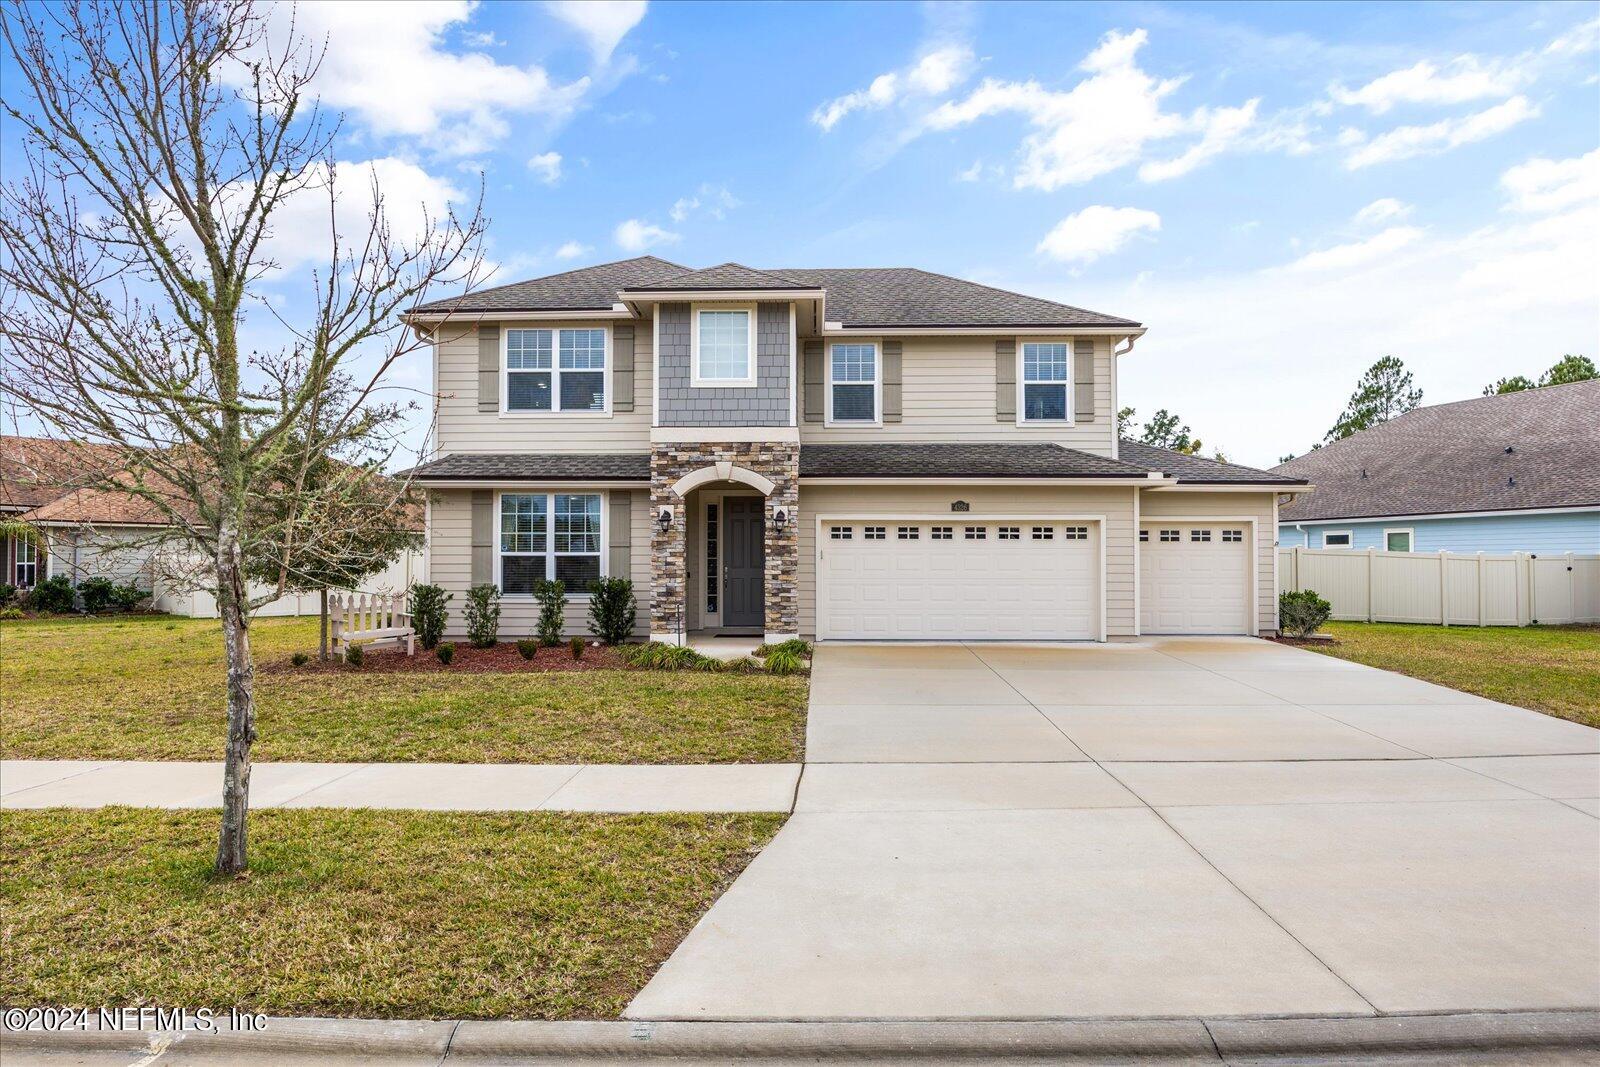 Middleburg, FL home for sale located at 4326 CHERRY LAKE Lane, Middleburg, FL 32068